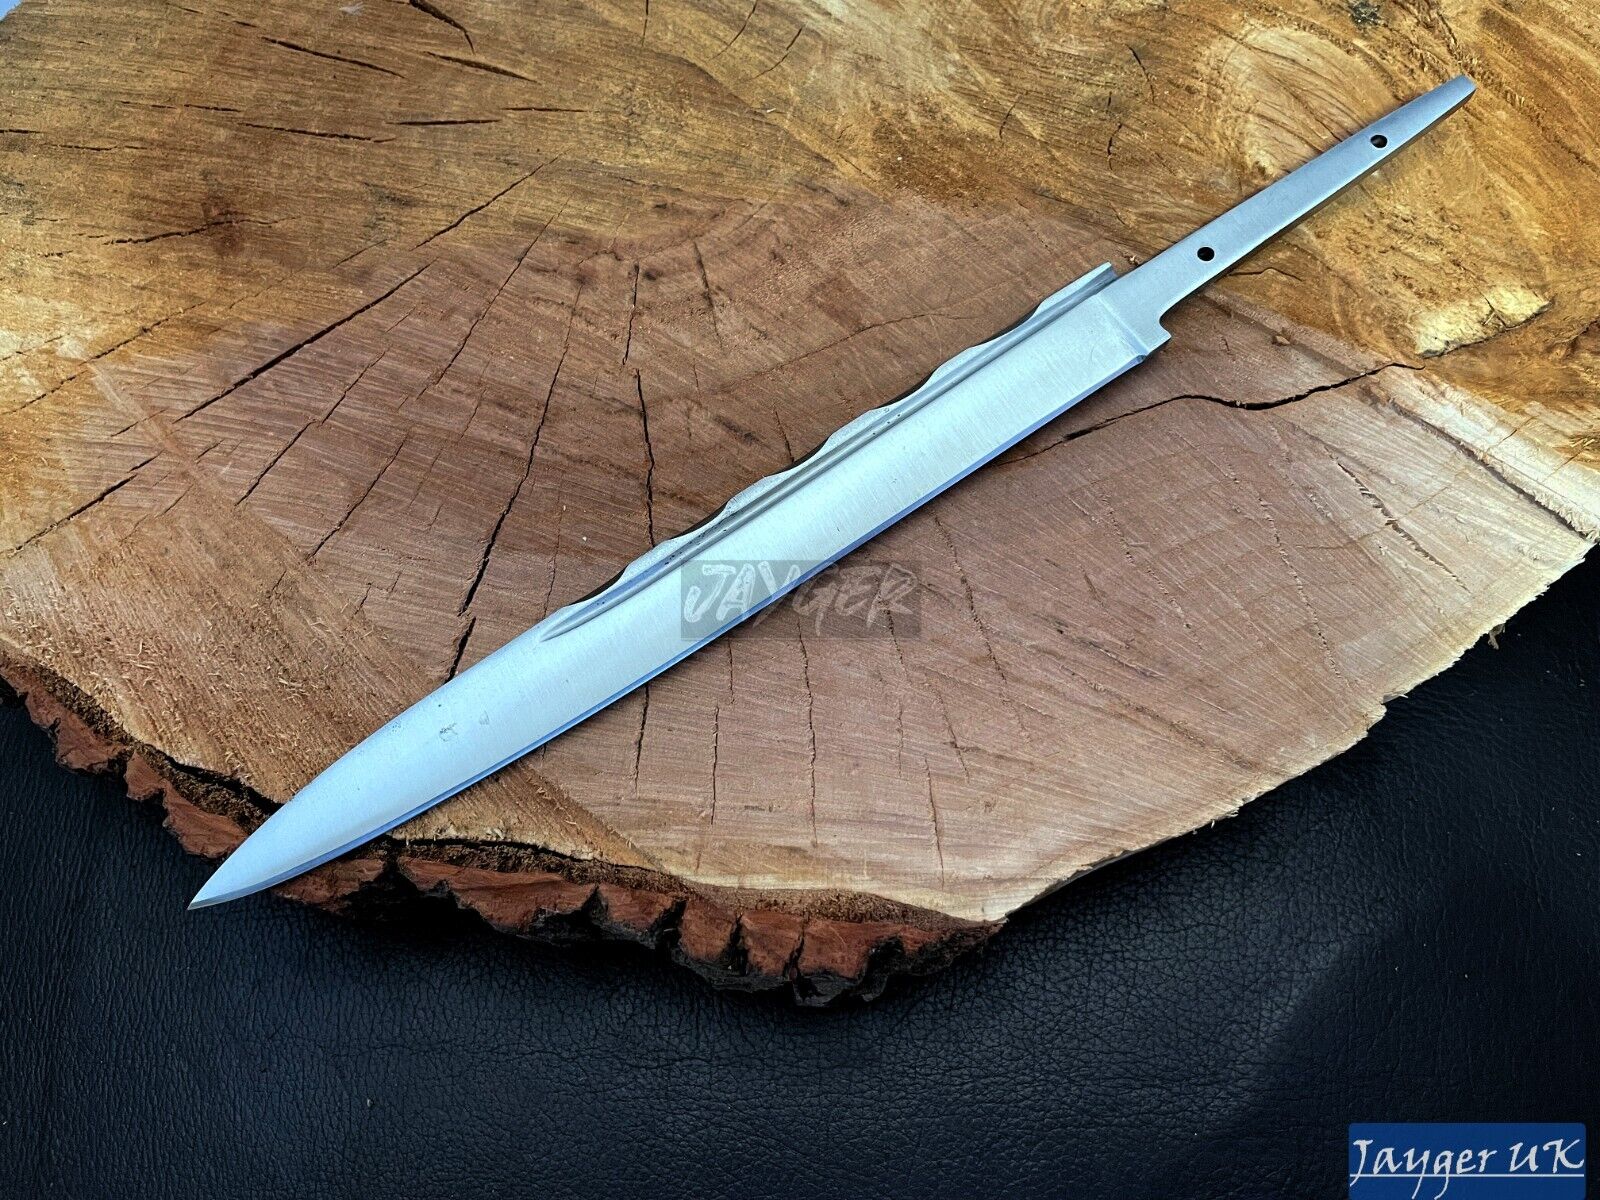 Jayger Handmade Carbon Steel Blade Blank-Scottish Dirk-Knife Making-C275